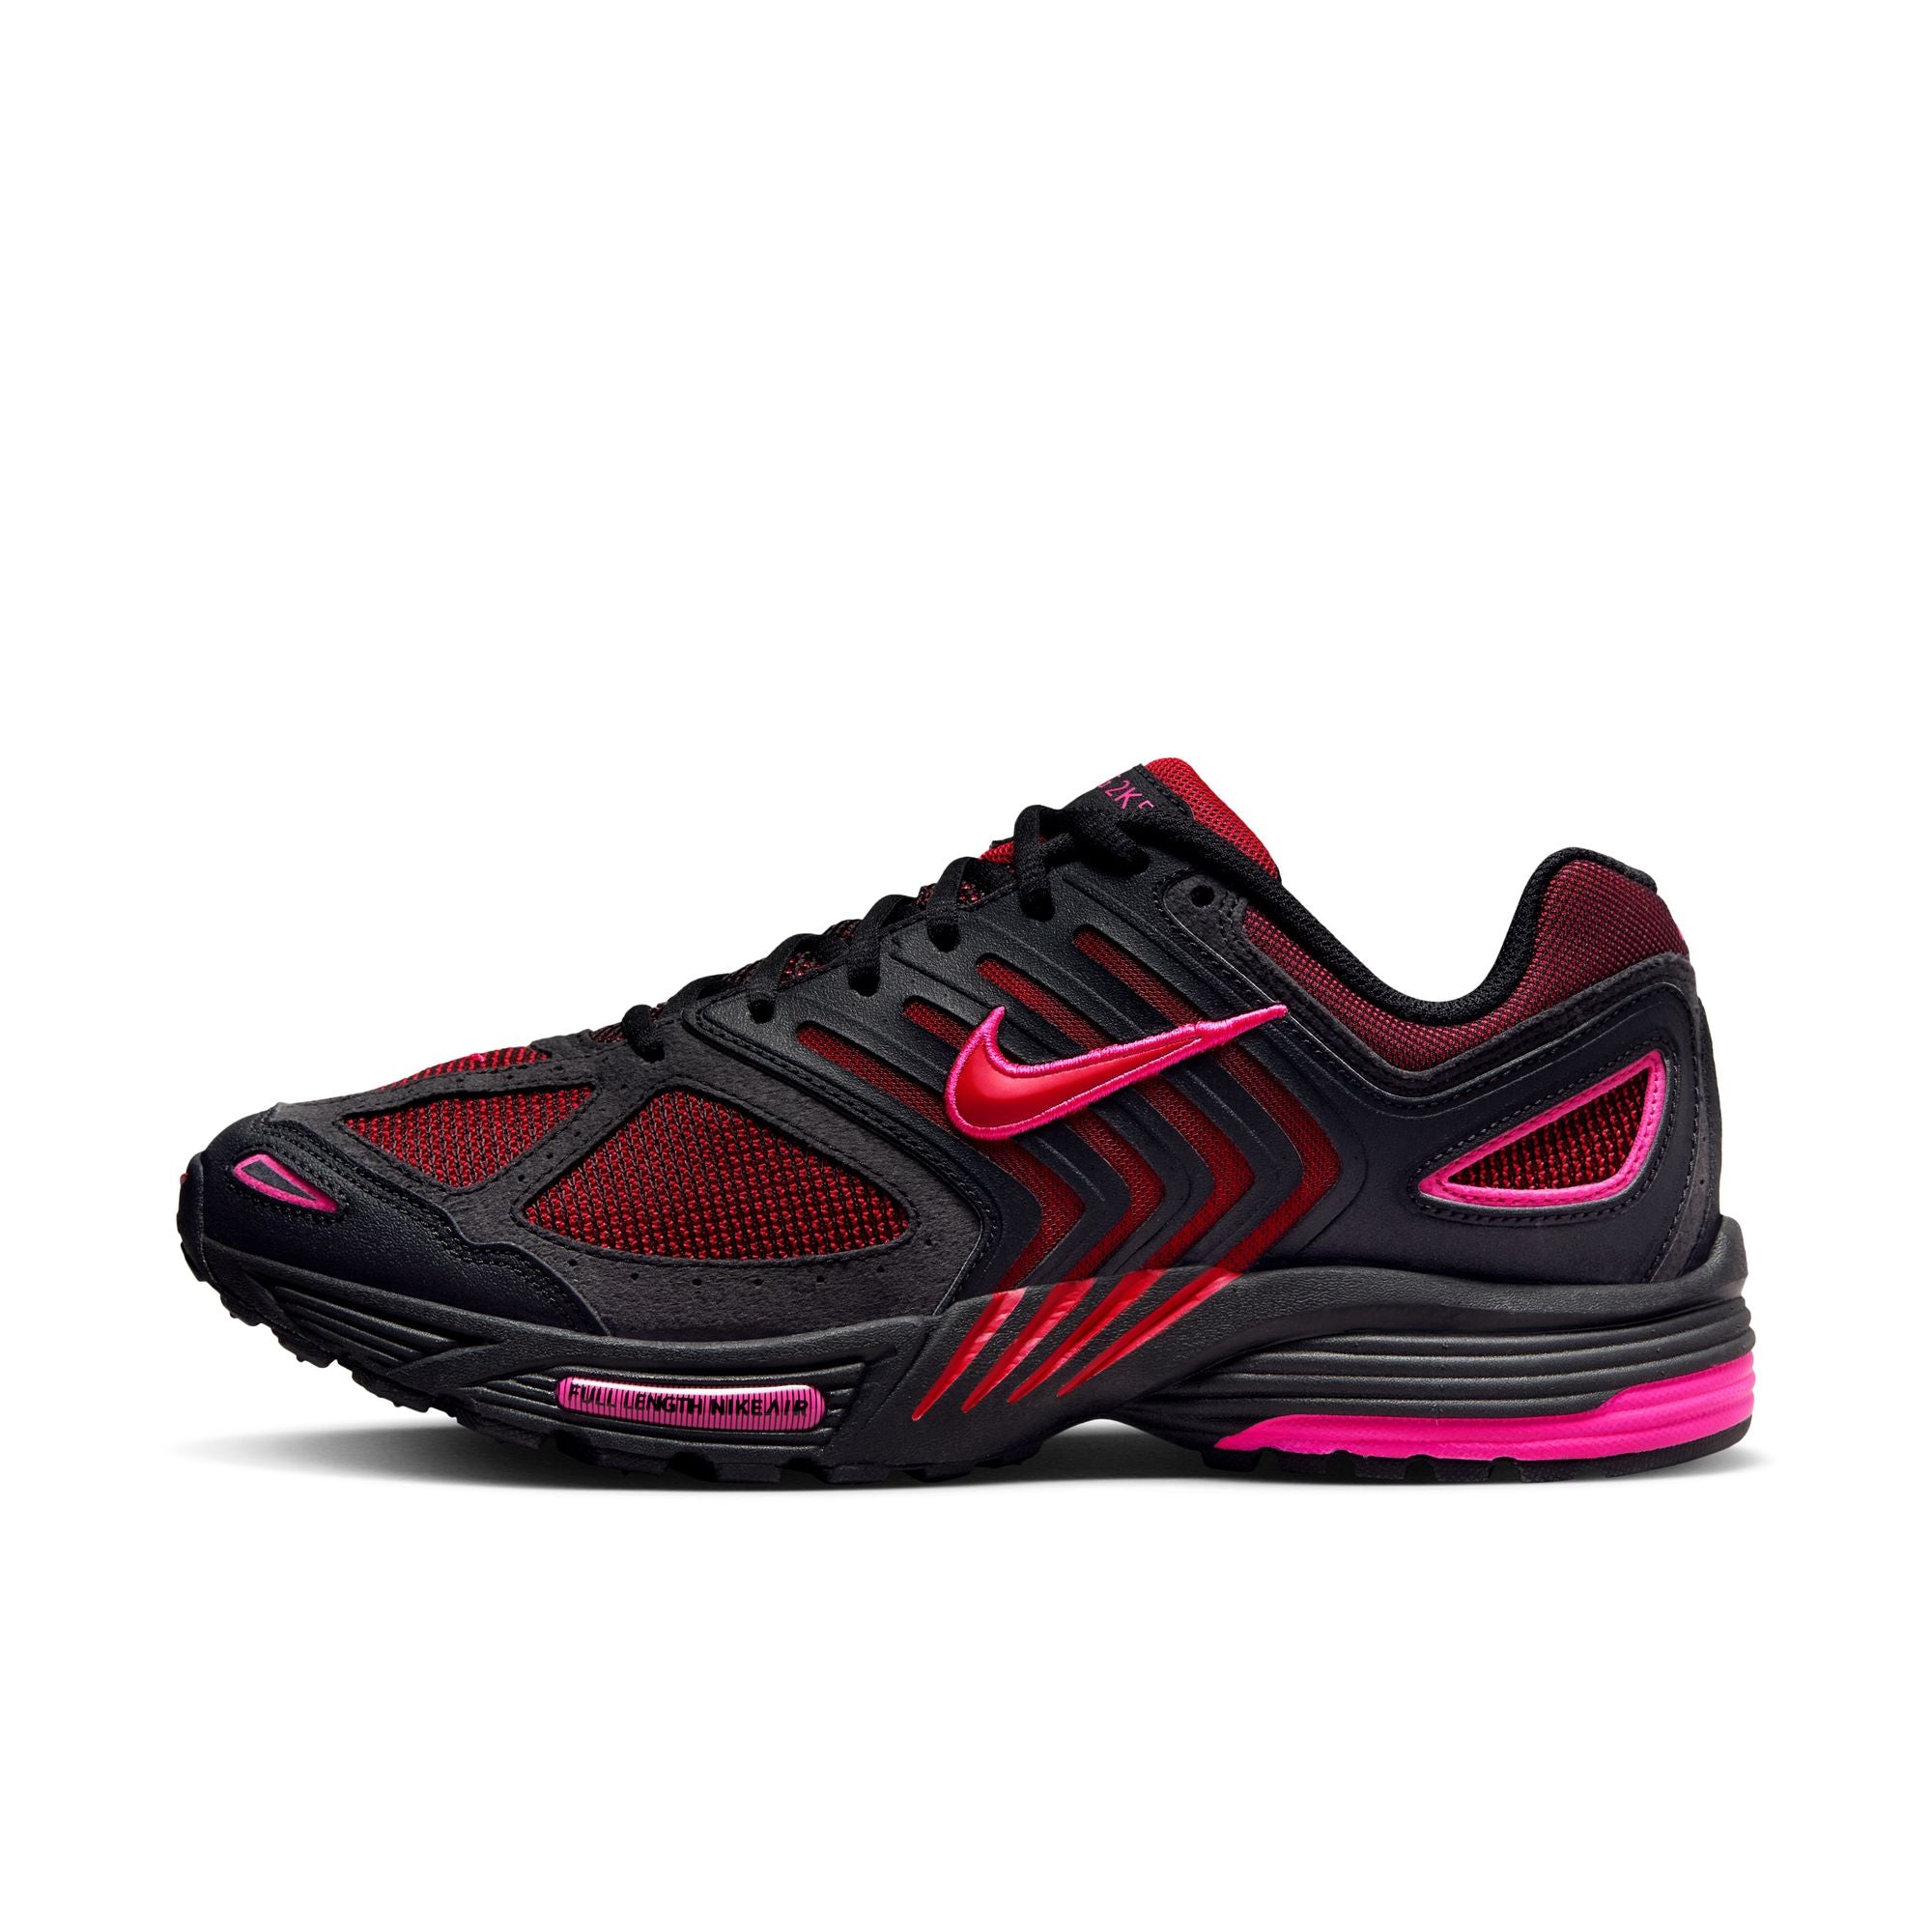 NIKE - Nike Air Peg 2K5 - (Black/Fire Red-Fierce Pink-Fie) view 3